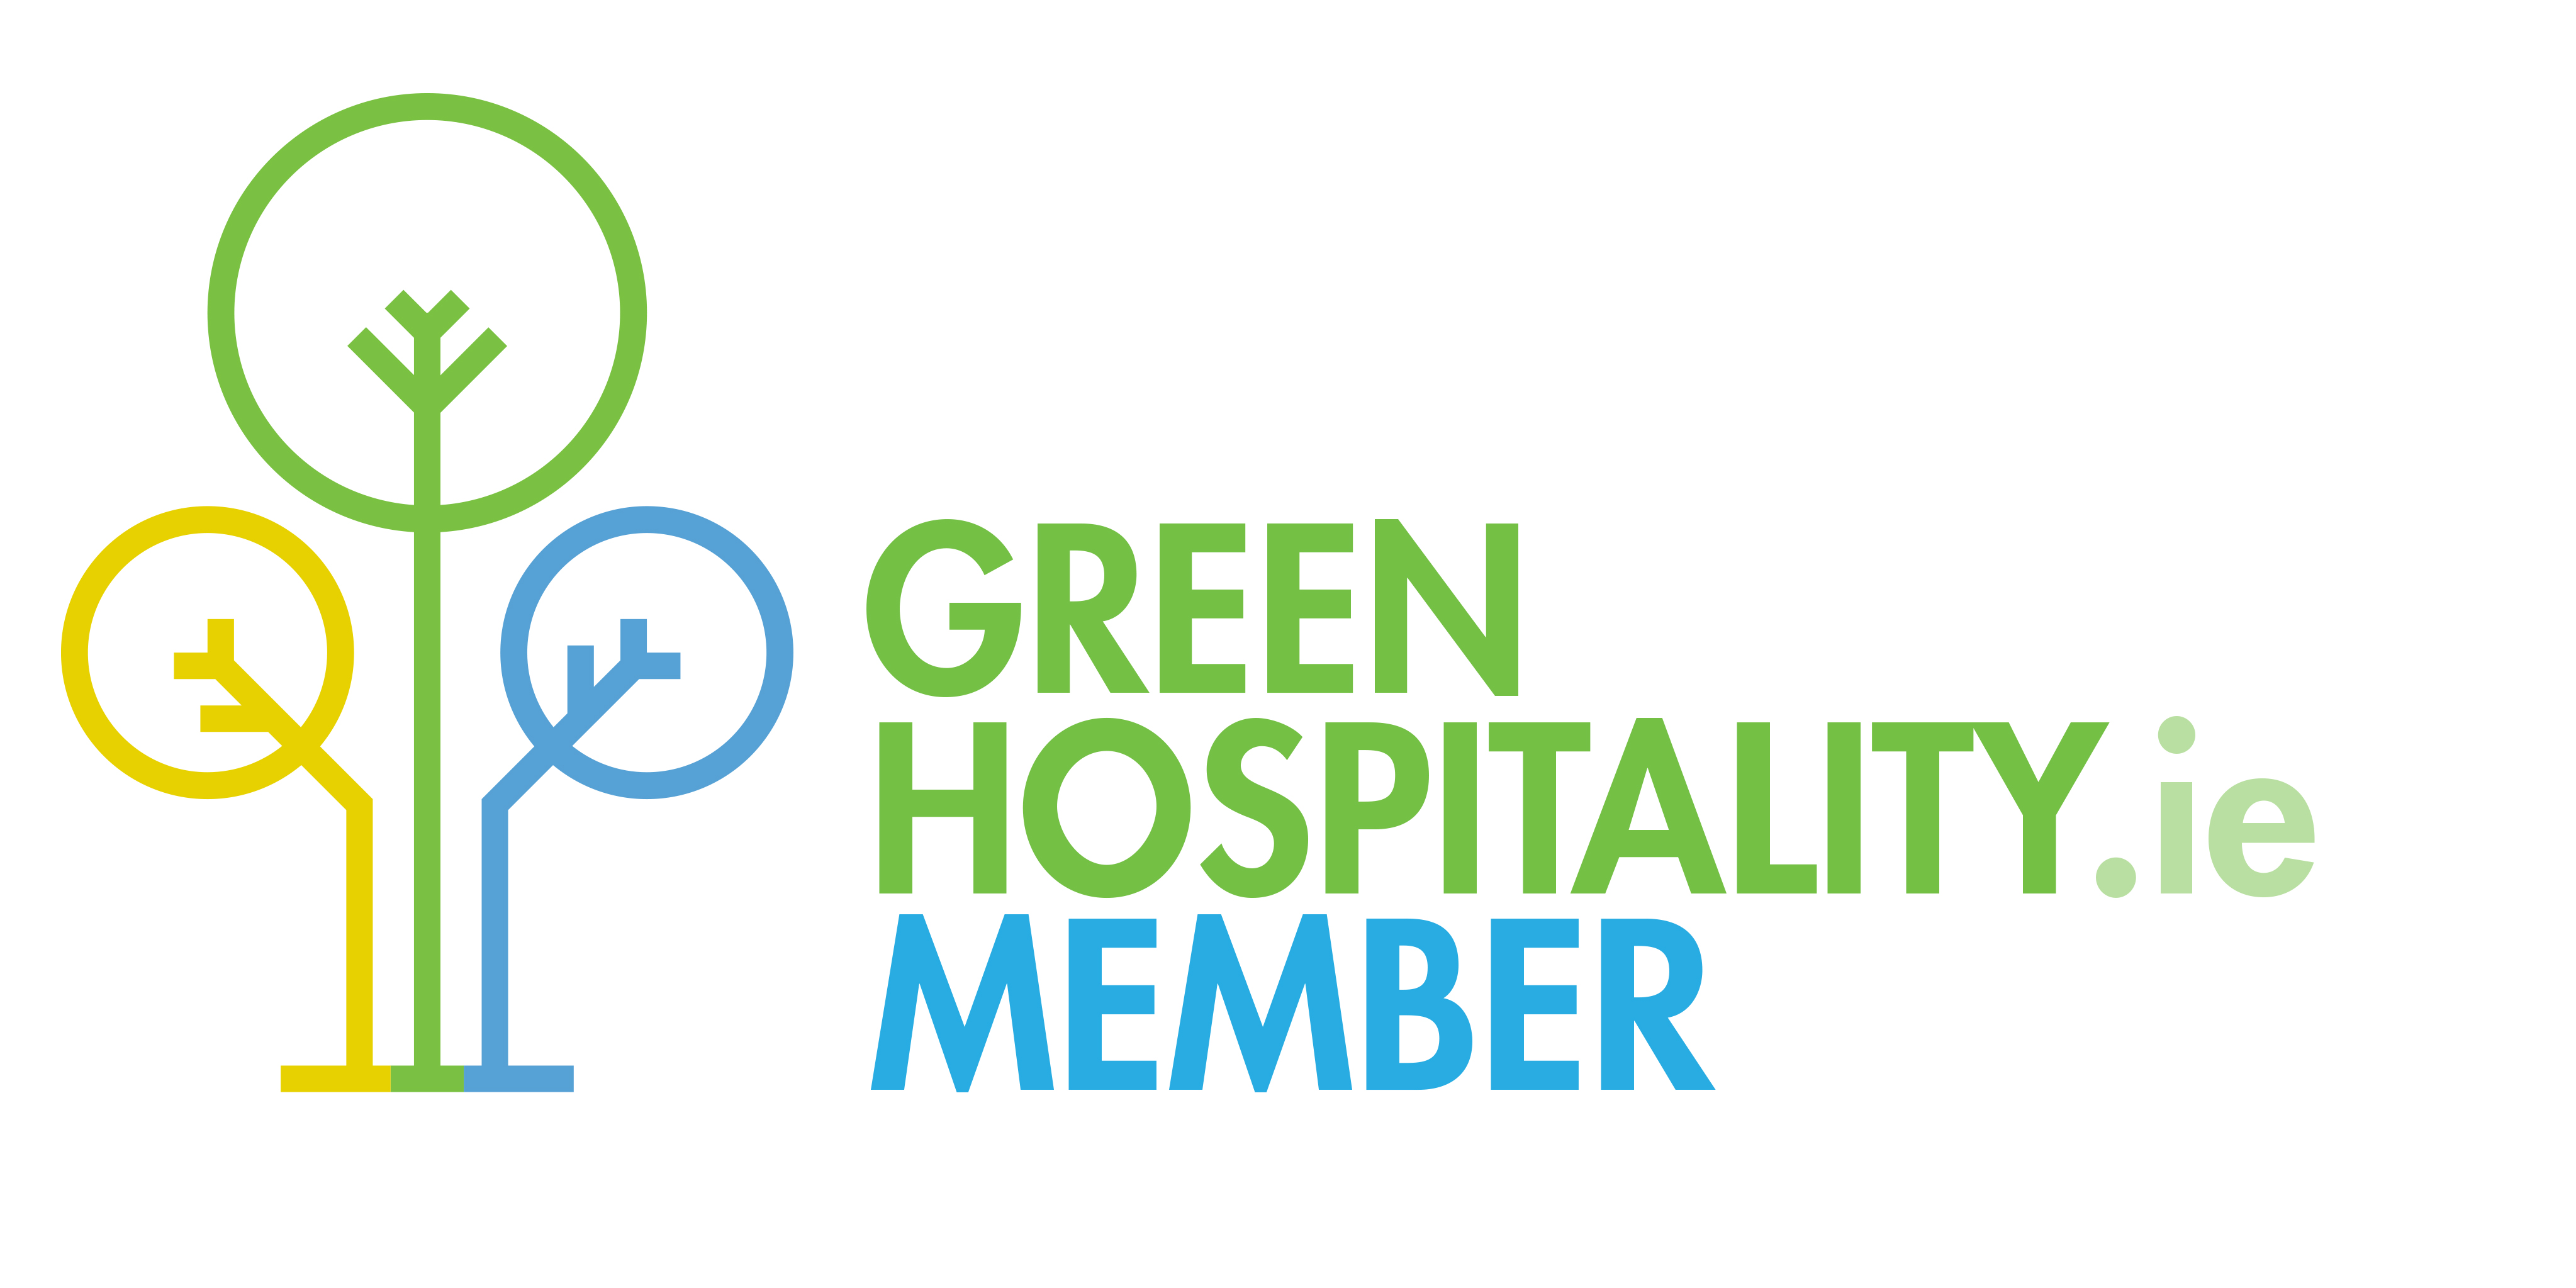 greenhospitality-logo